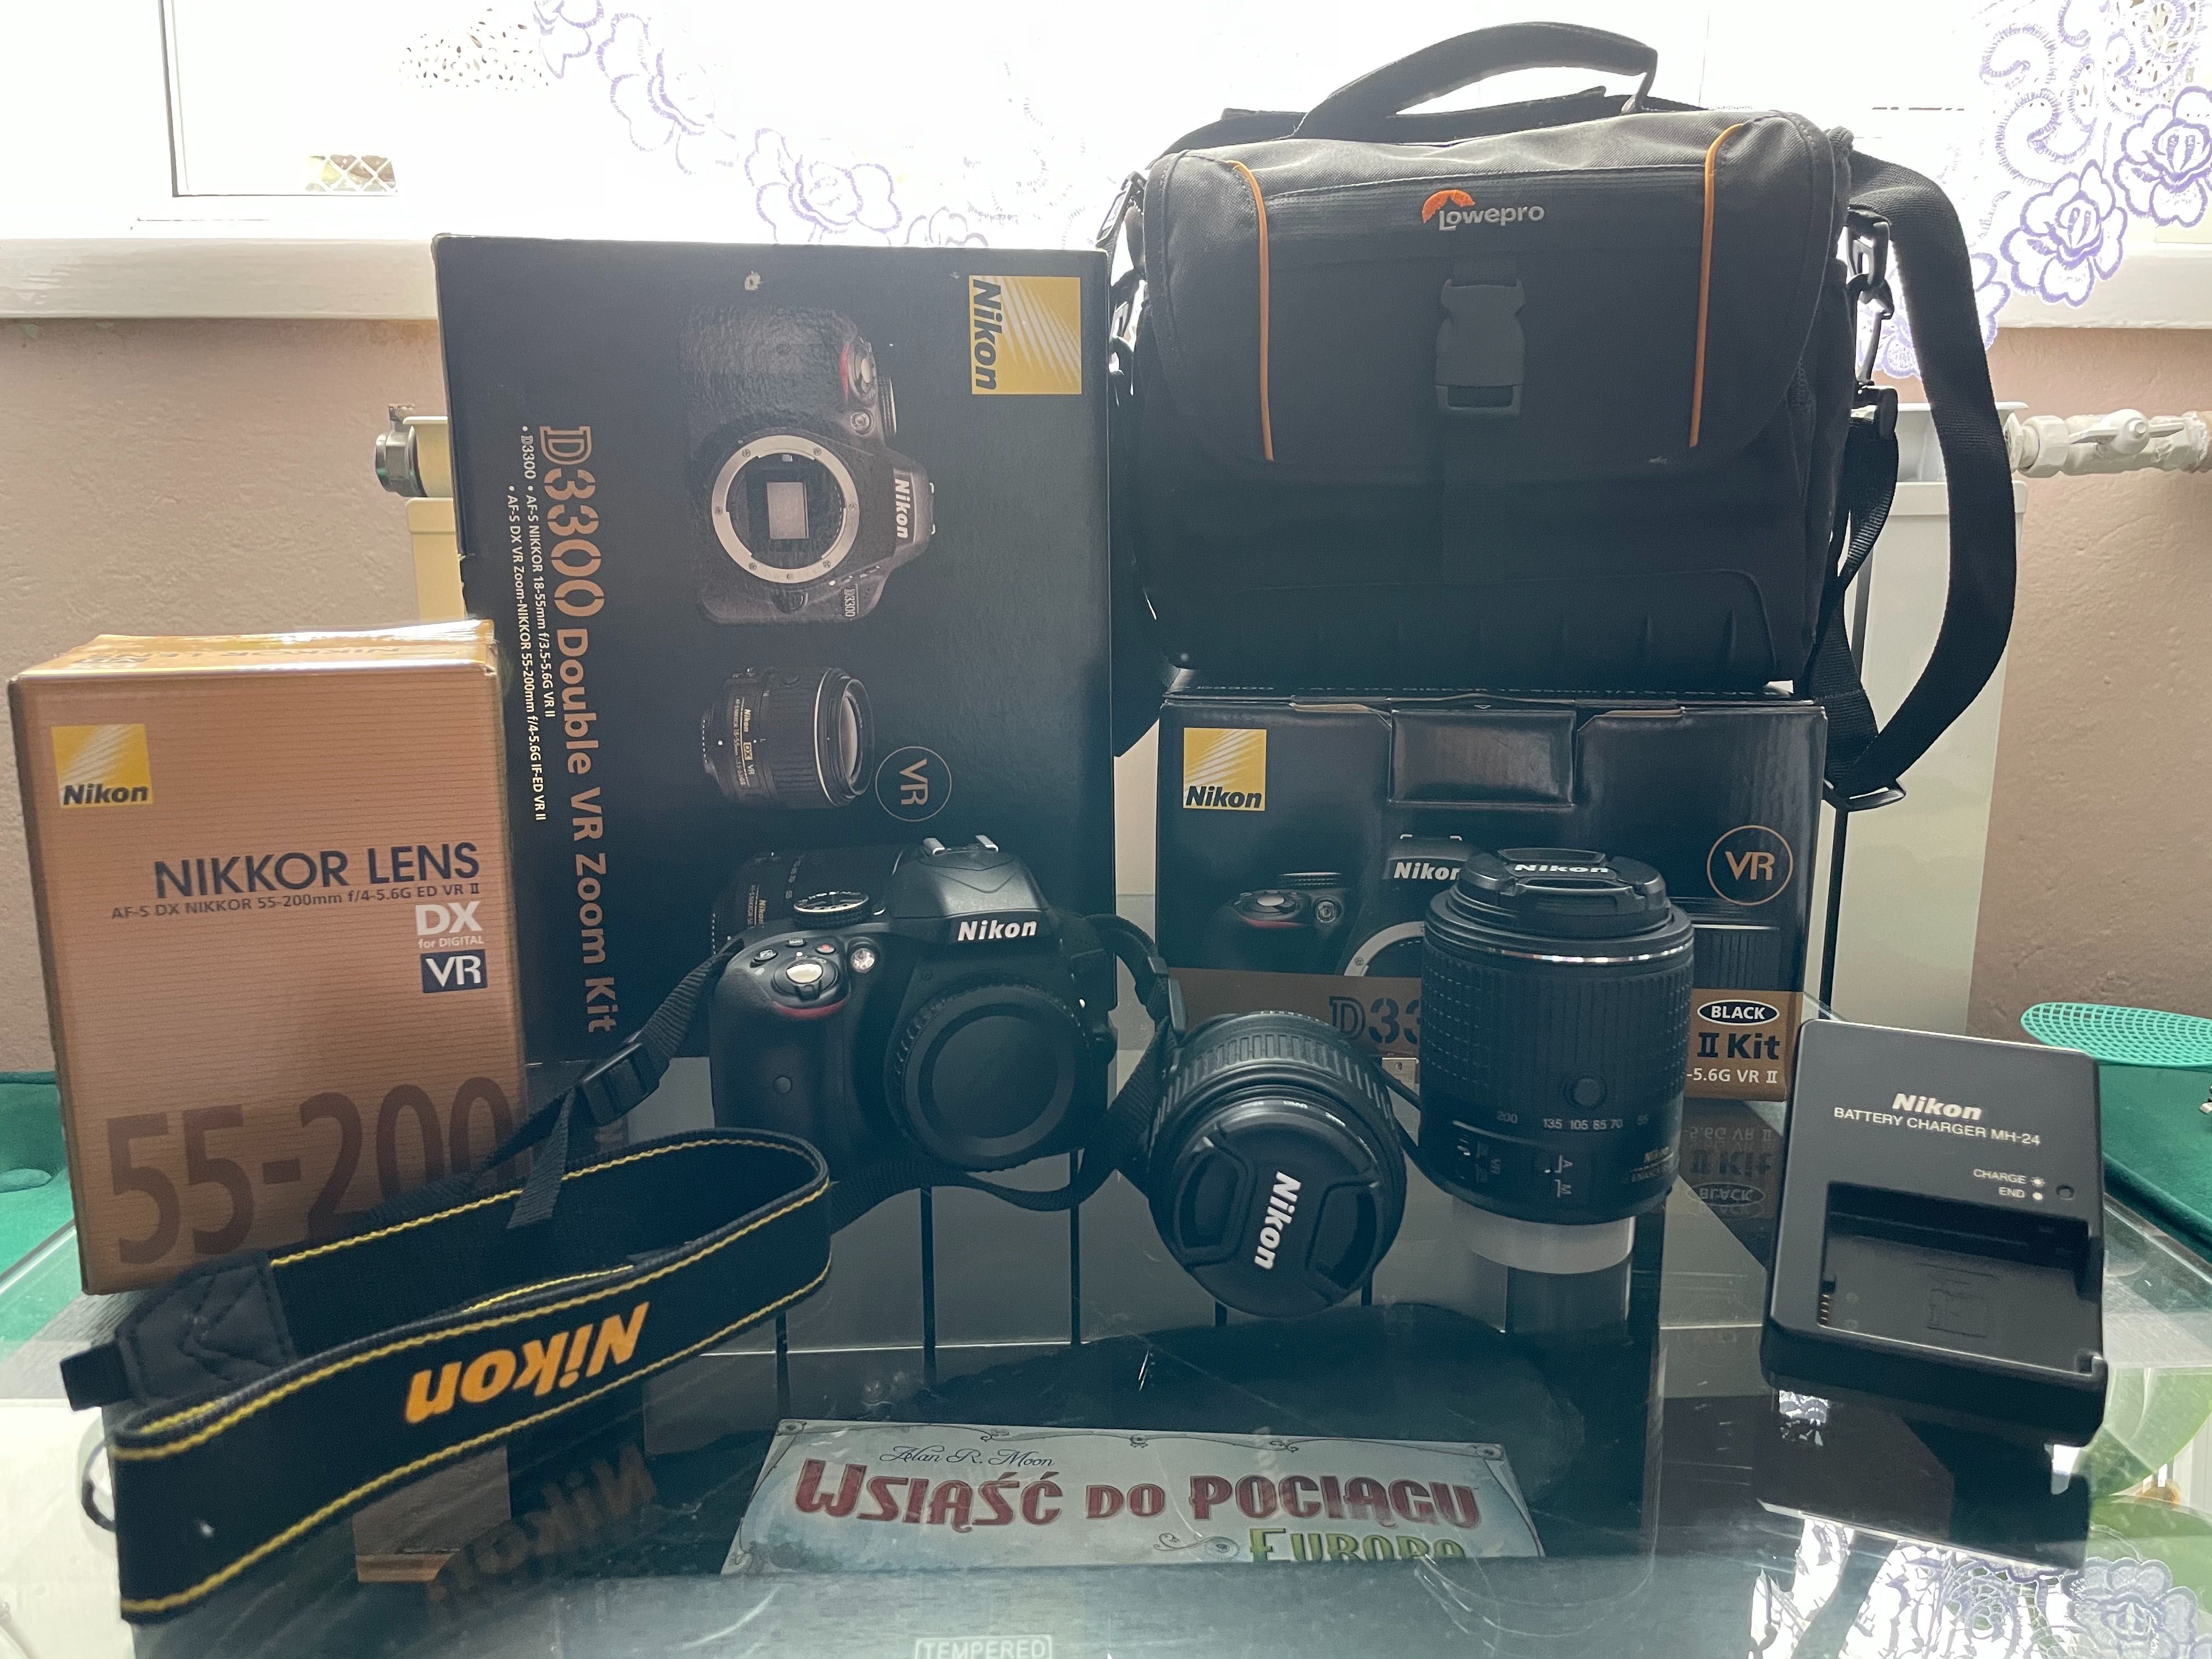 Nikon D3300 Double VR Zoom Kit